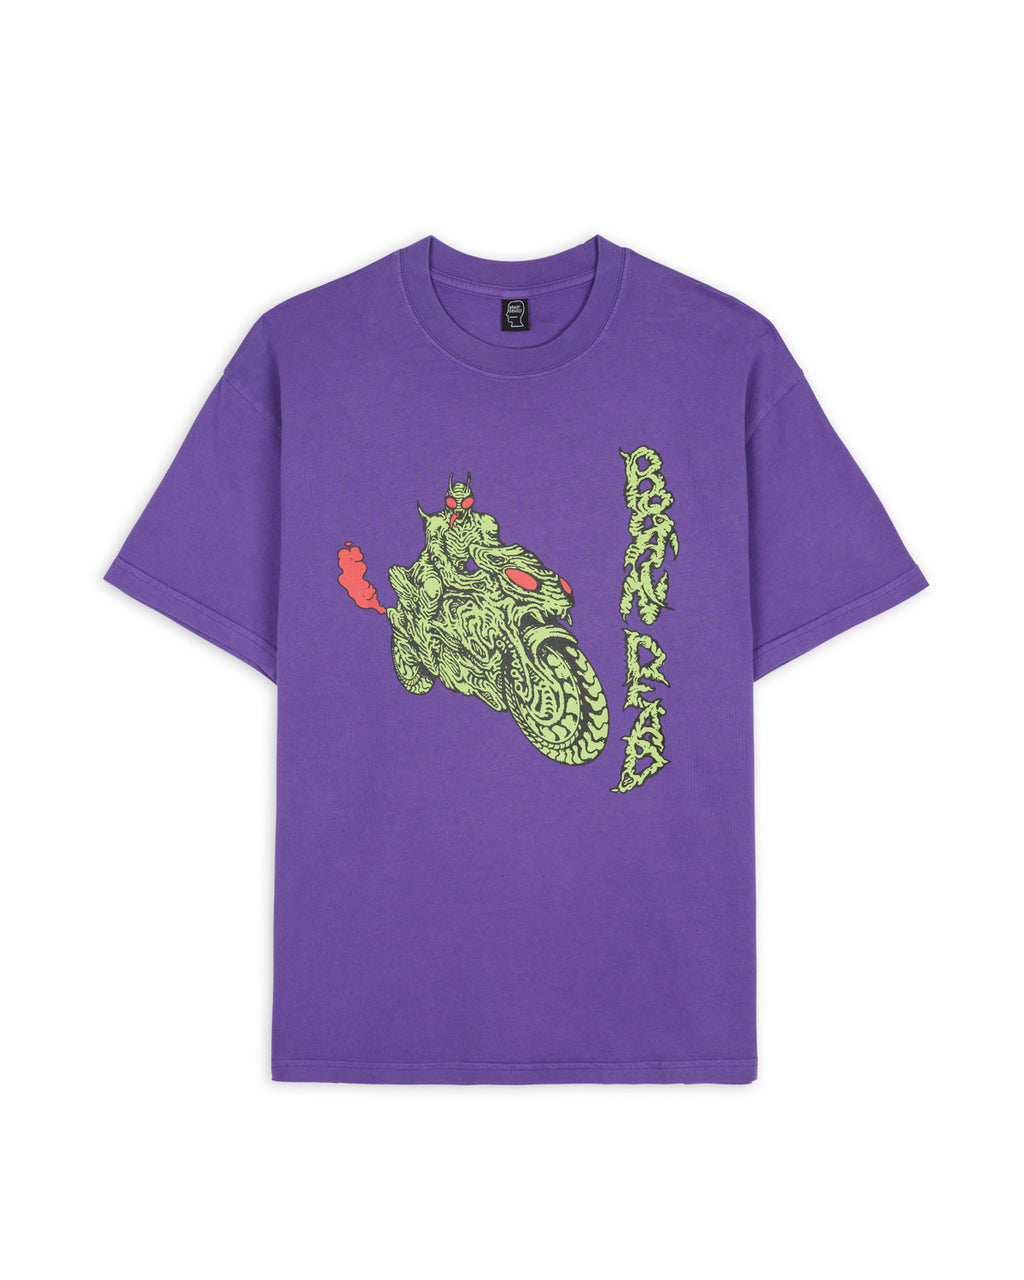 Goon Rider T-shirt - Purple